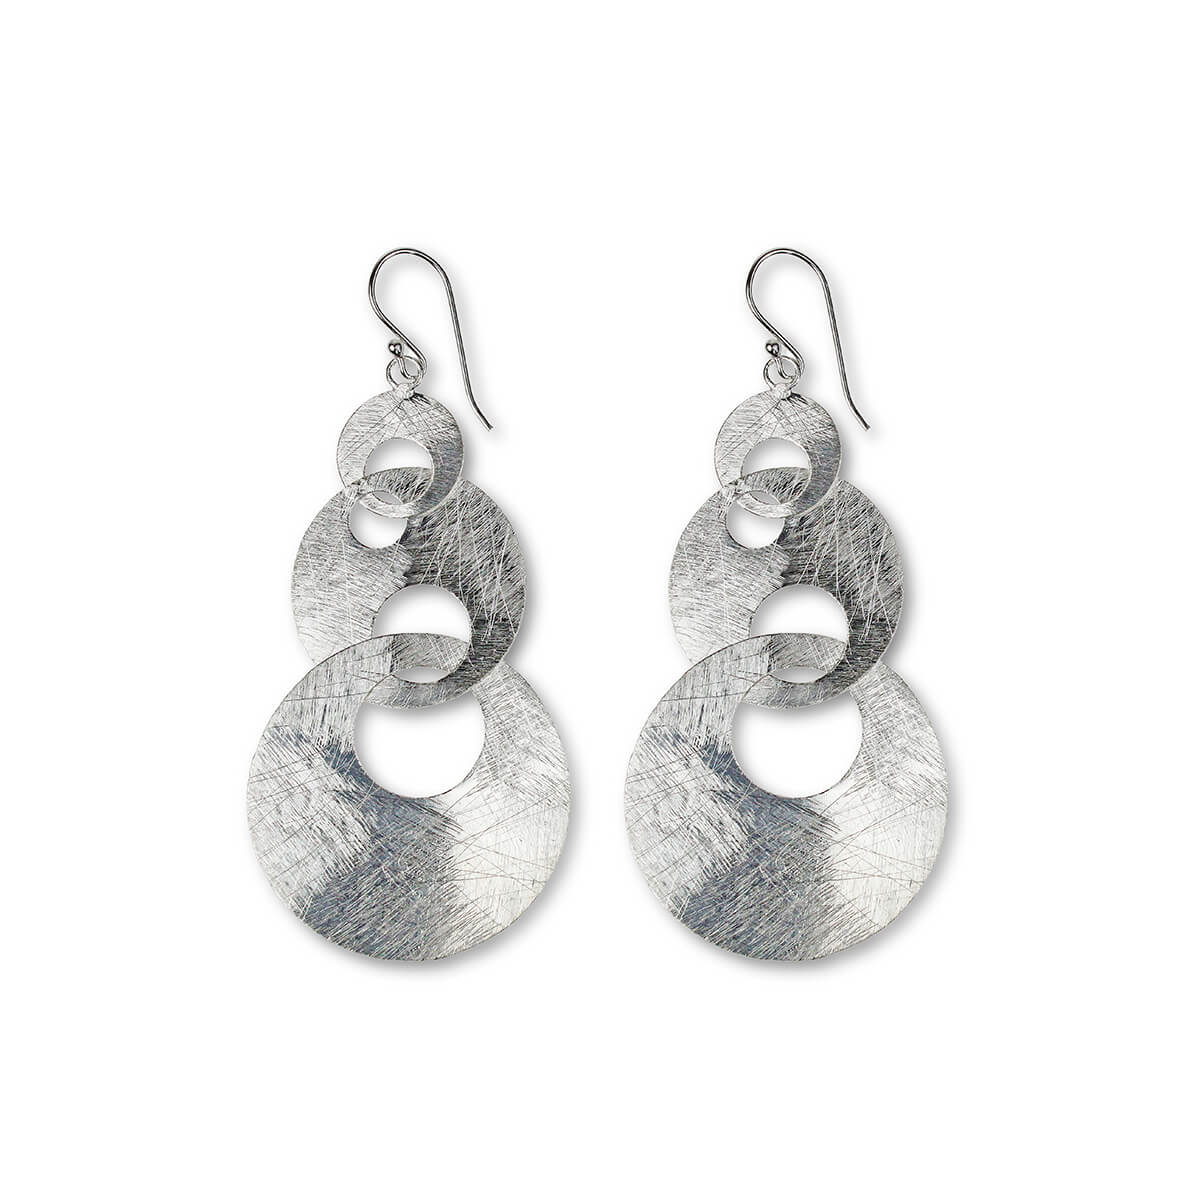 Carlina earrings - Silver